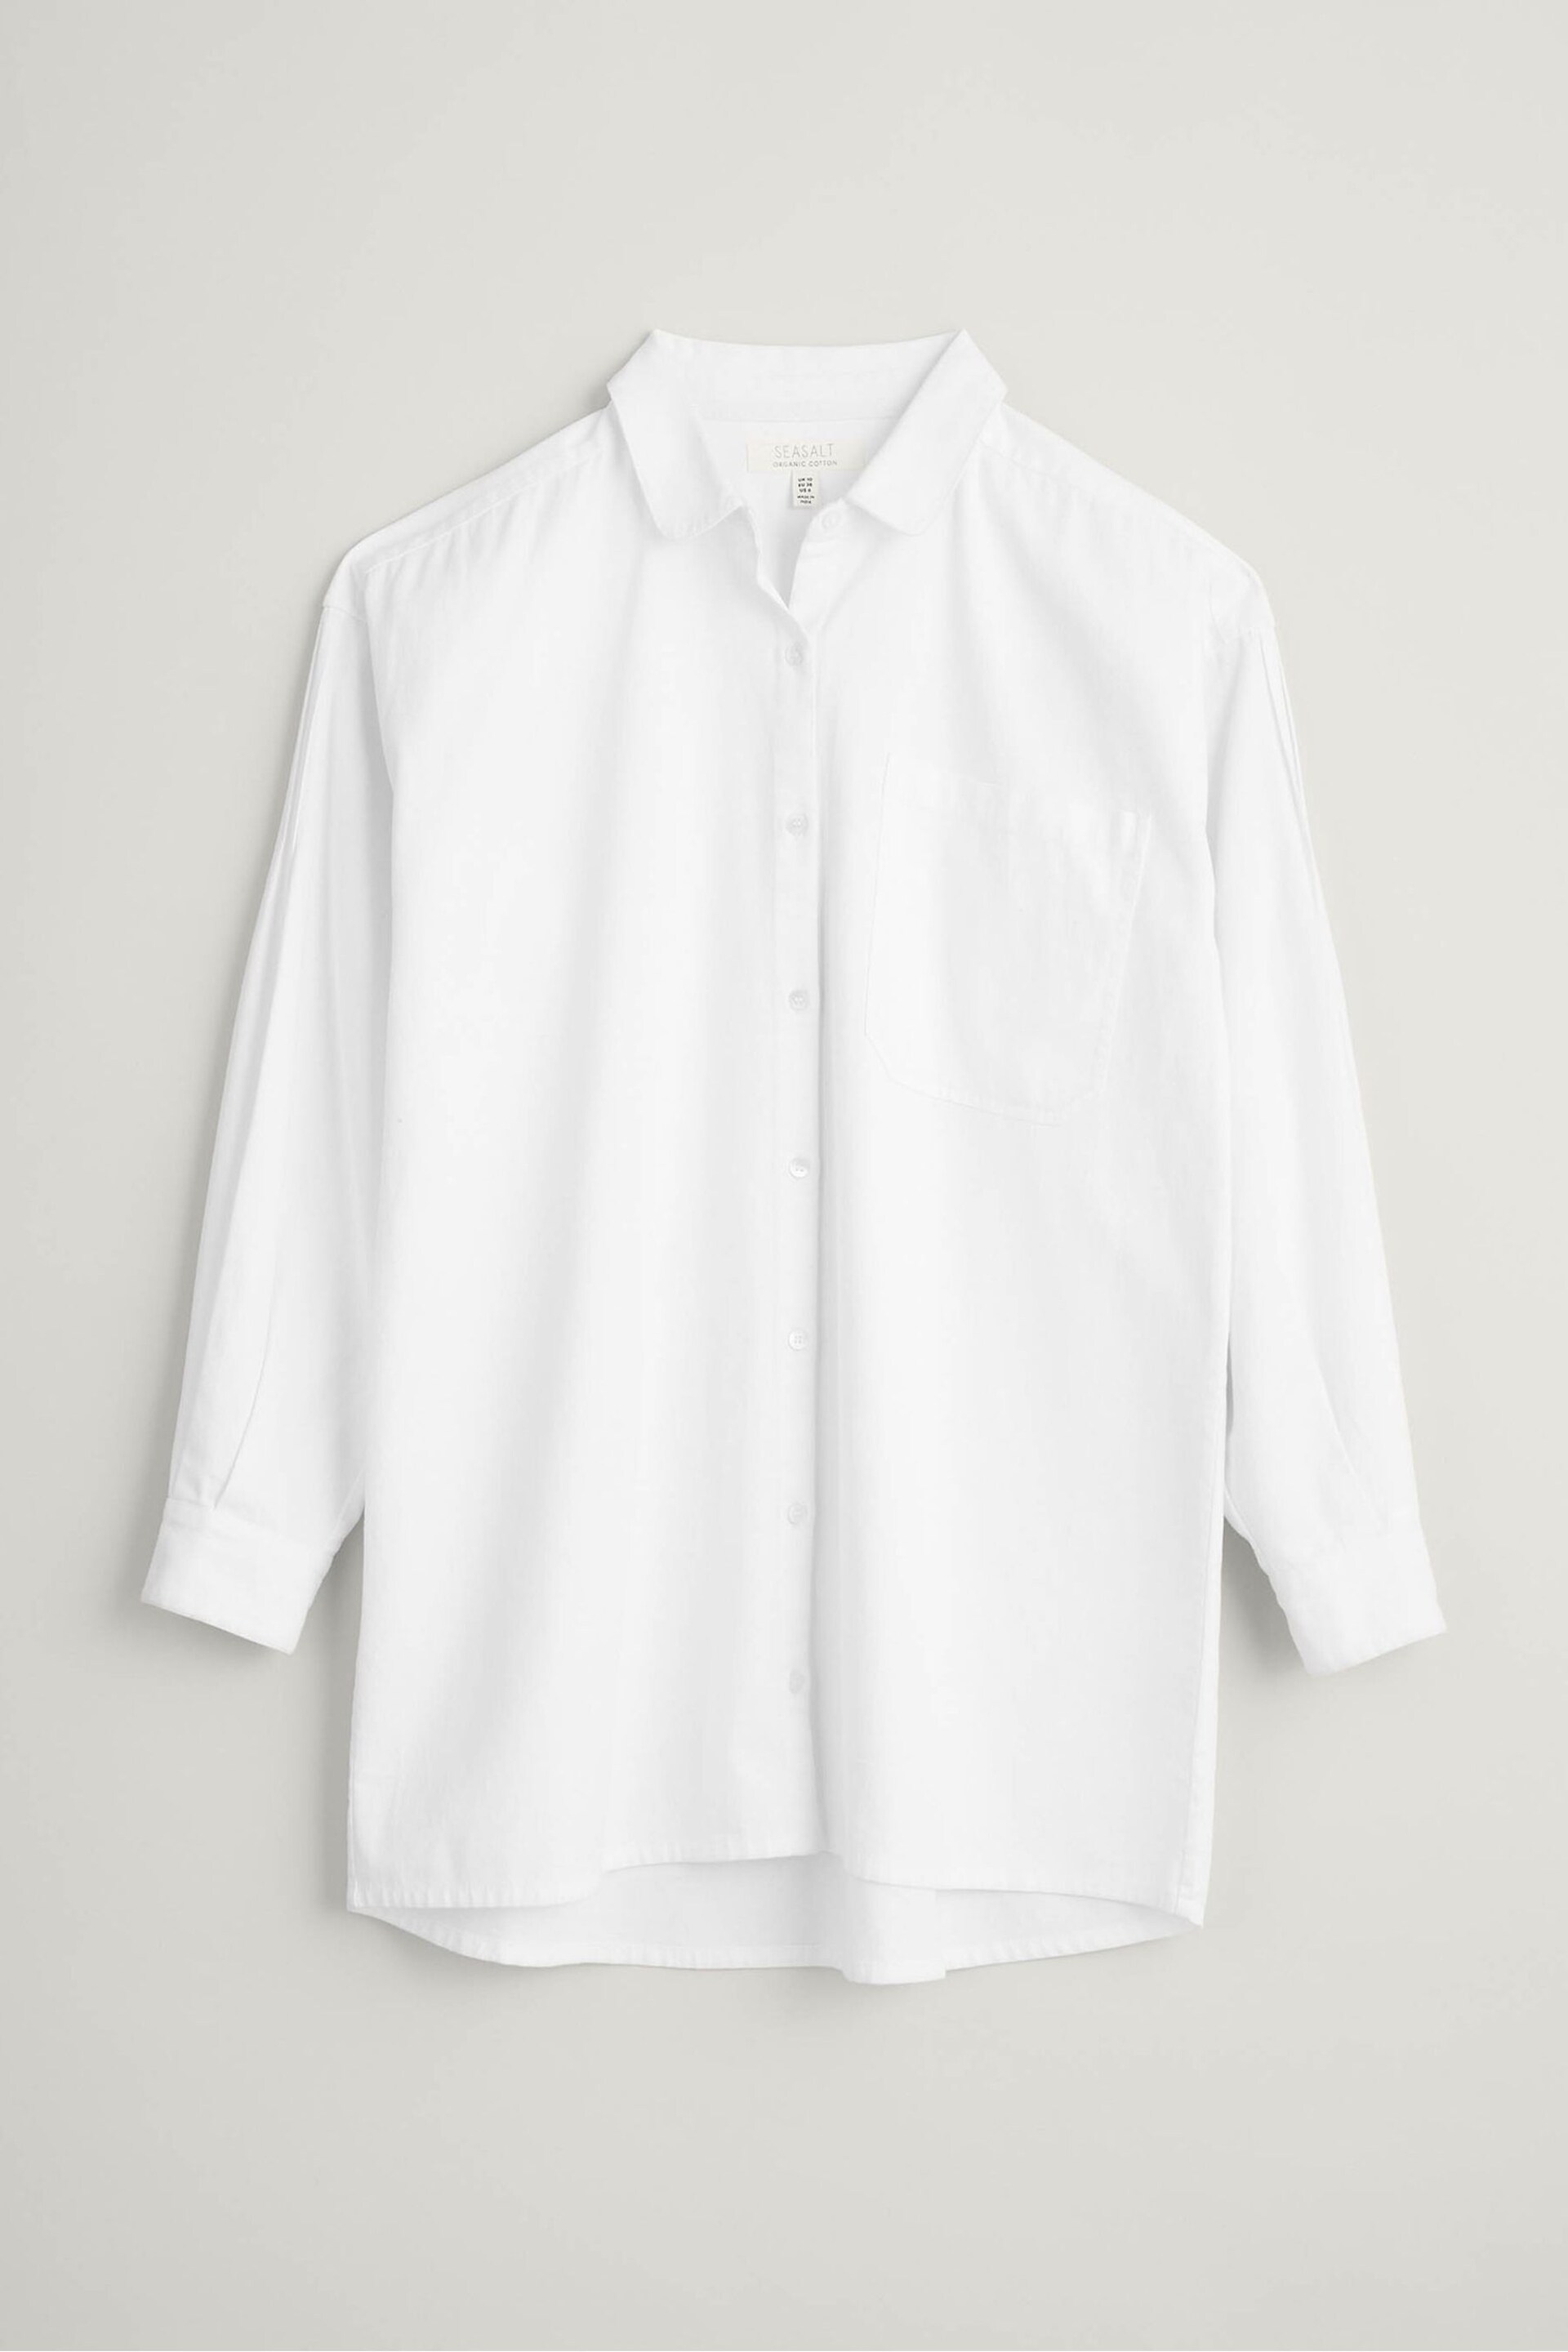 Seasalt Cornwall White Lavant Mor Cotton Shirt - Image 1 of 5